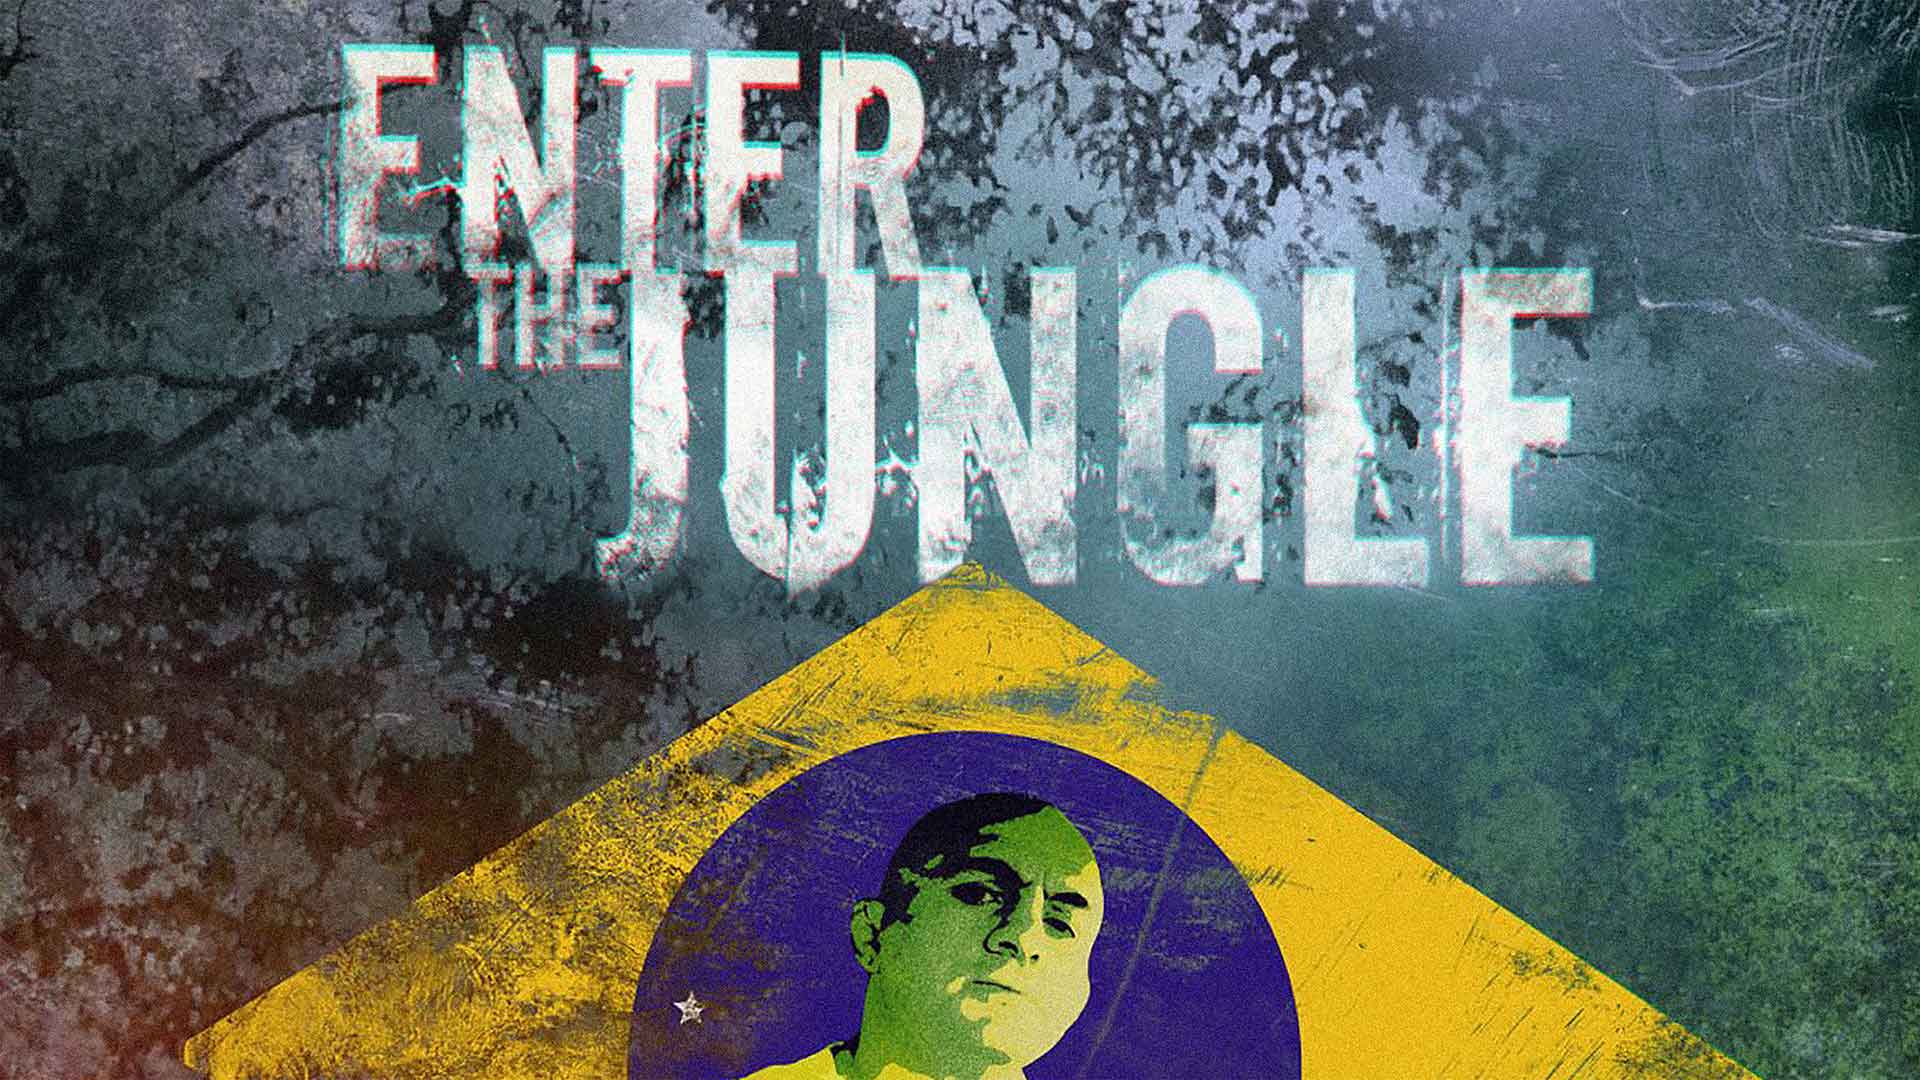 Enter The Jungle